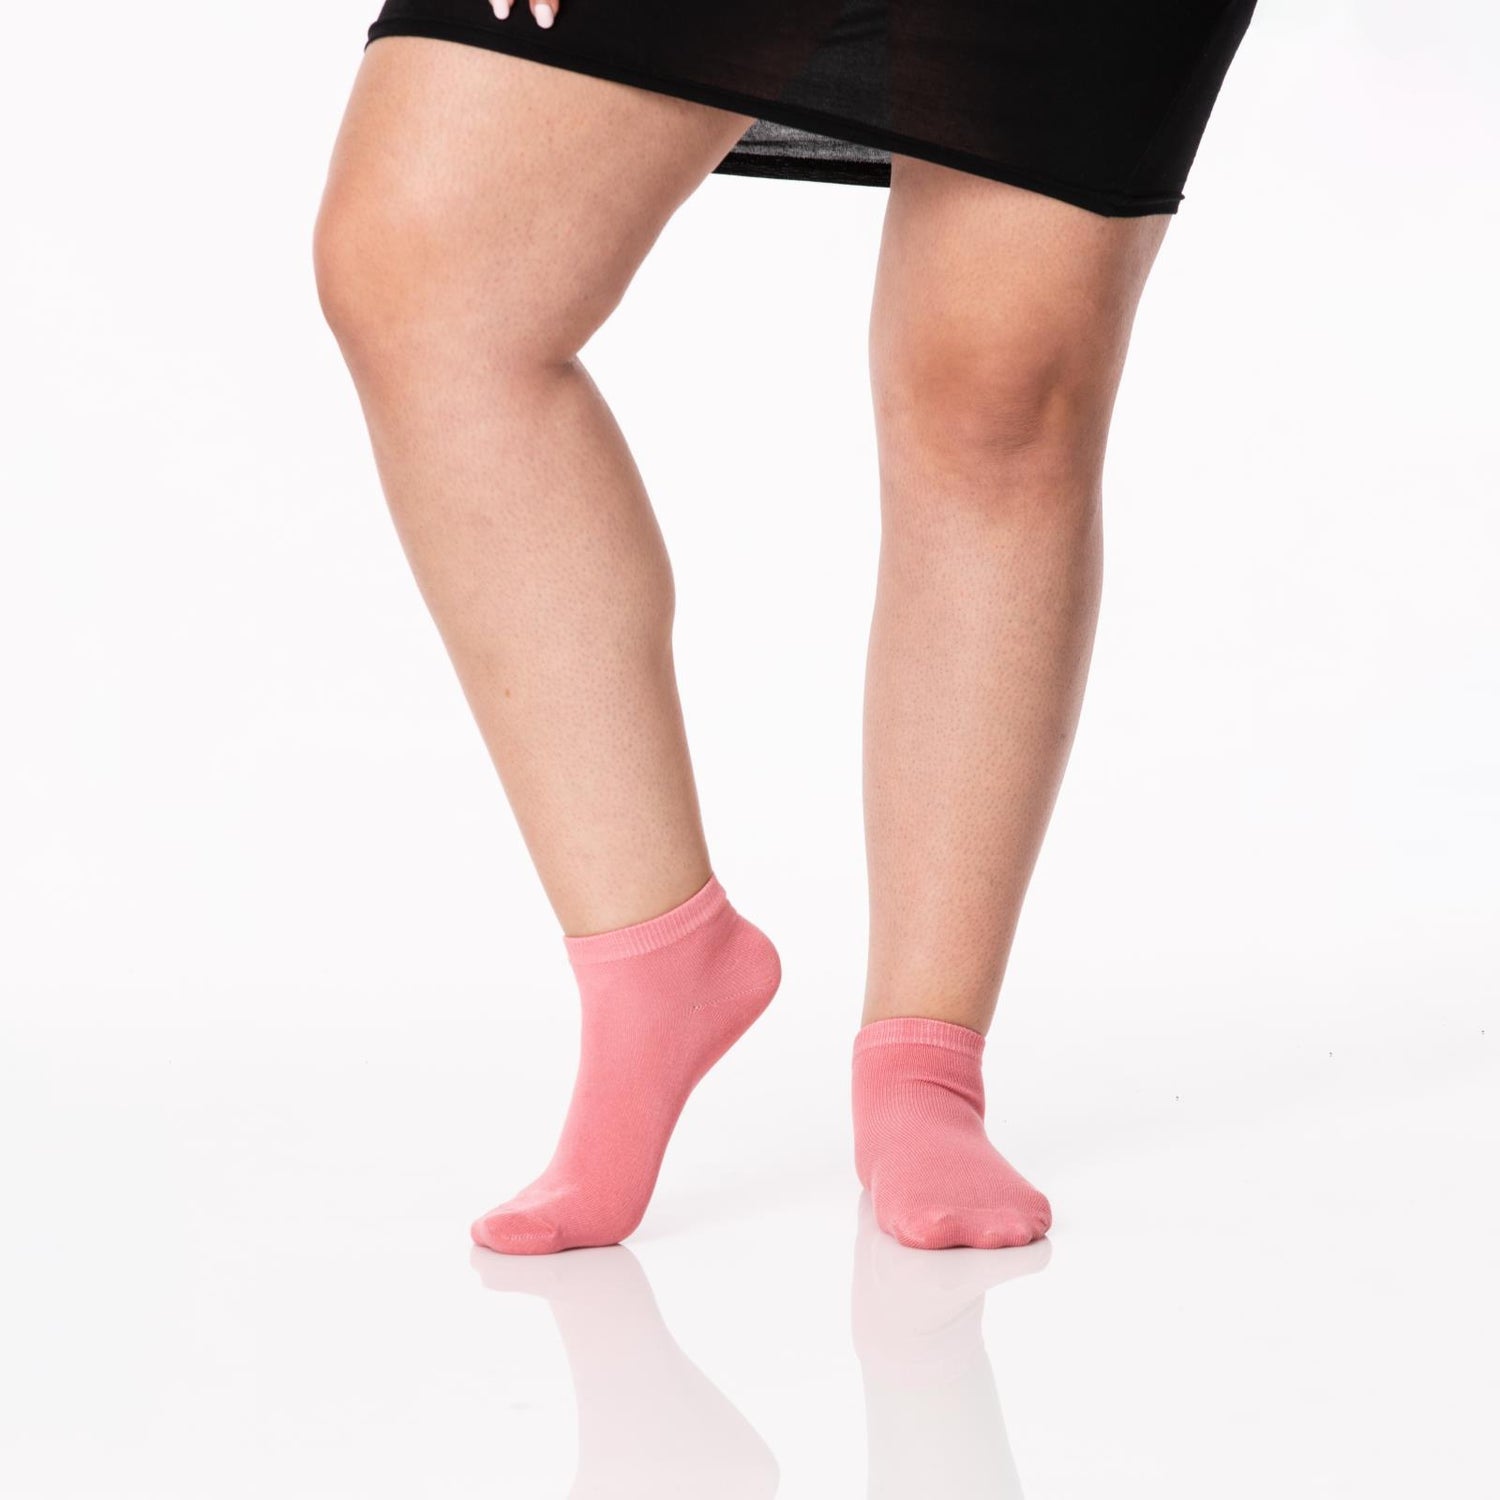 Women's Solid Ankle Socks in Strawberry